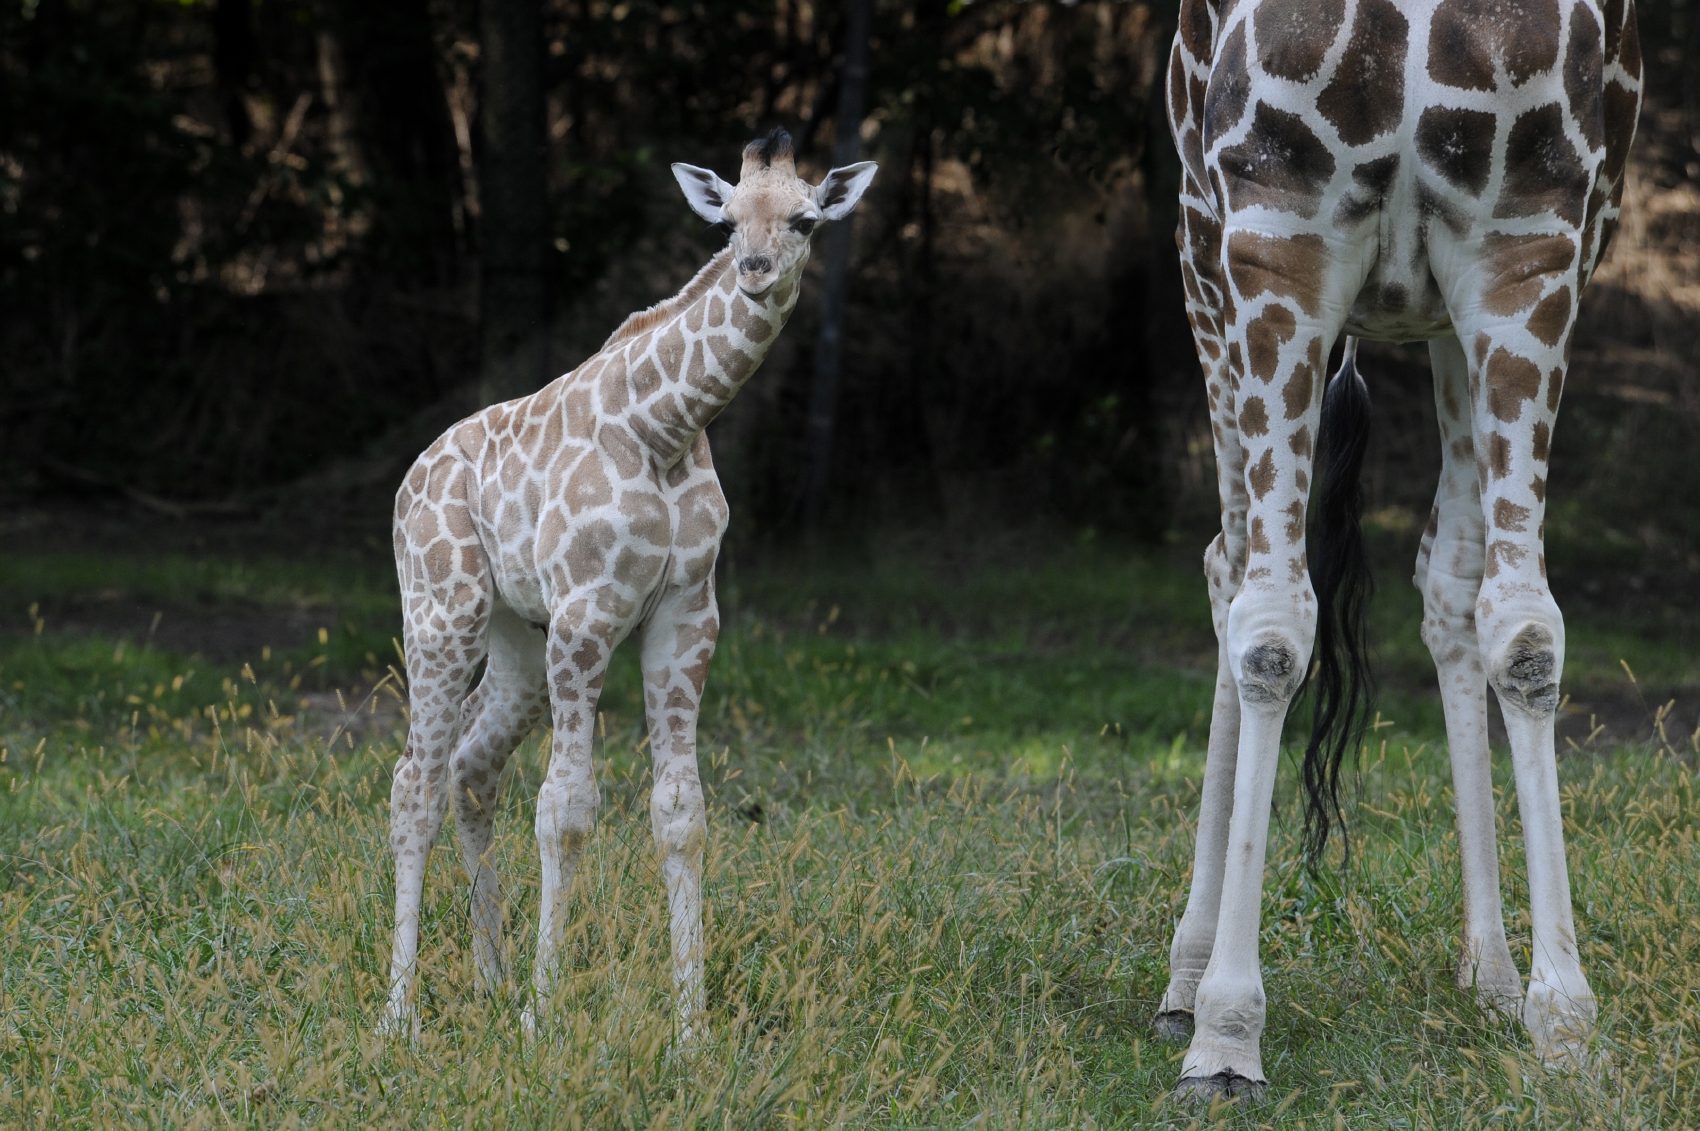 Baby giraffe at Bronx Zoo 